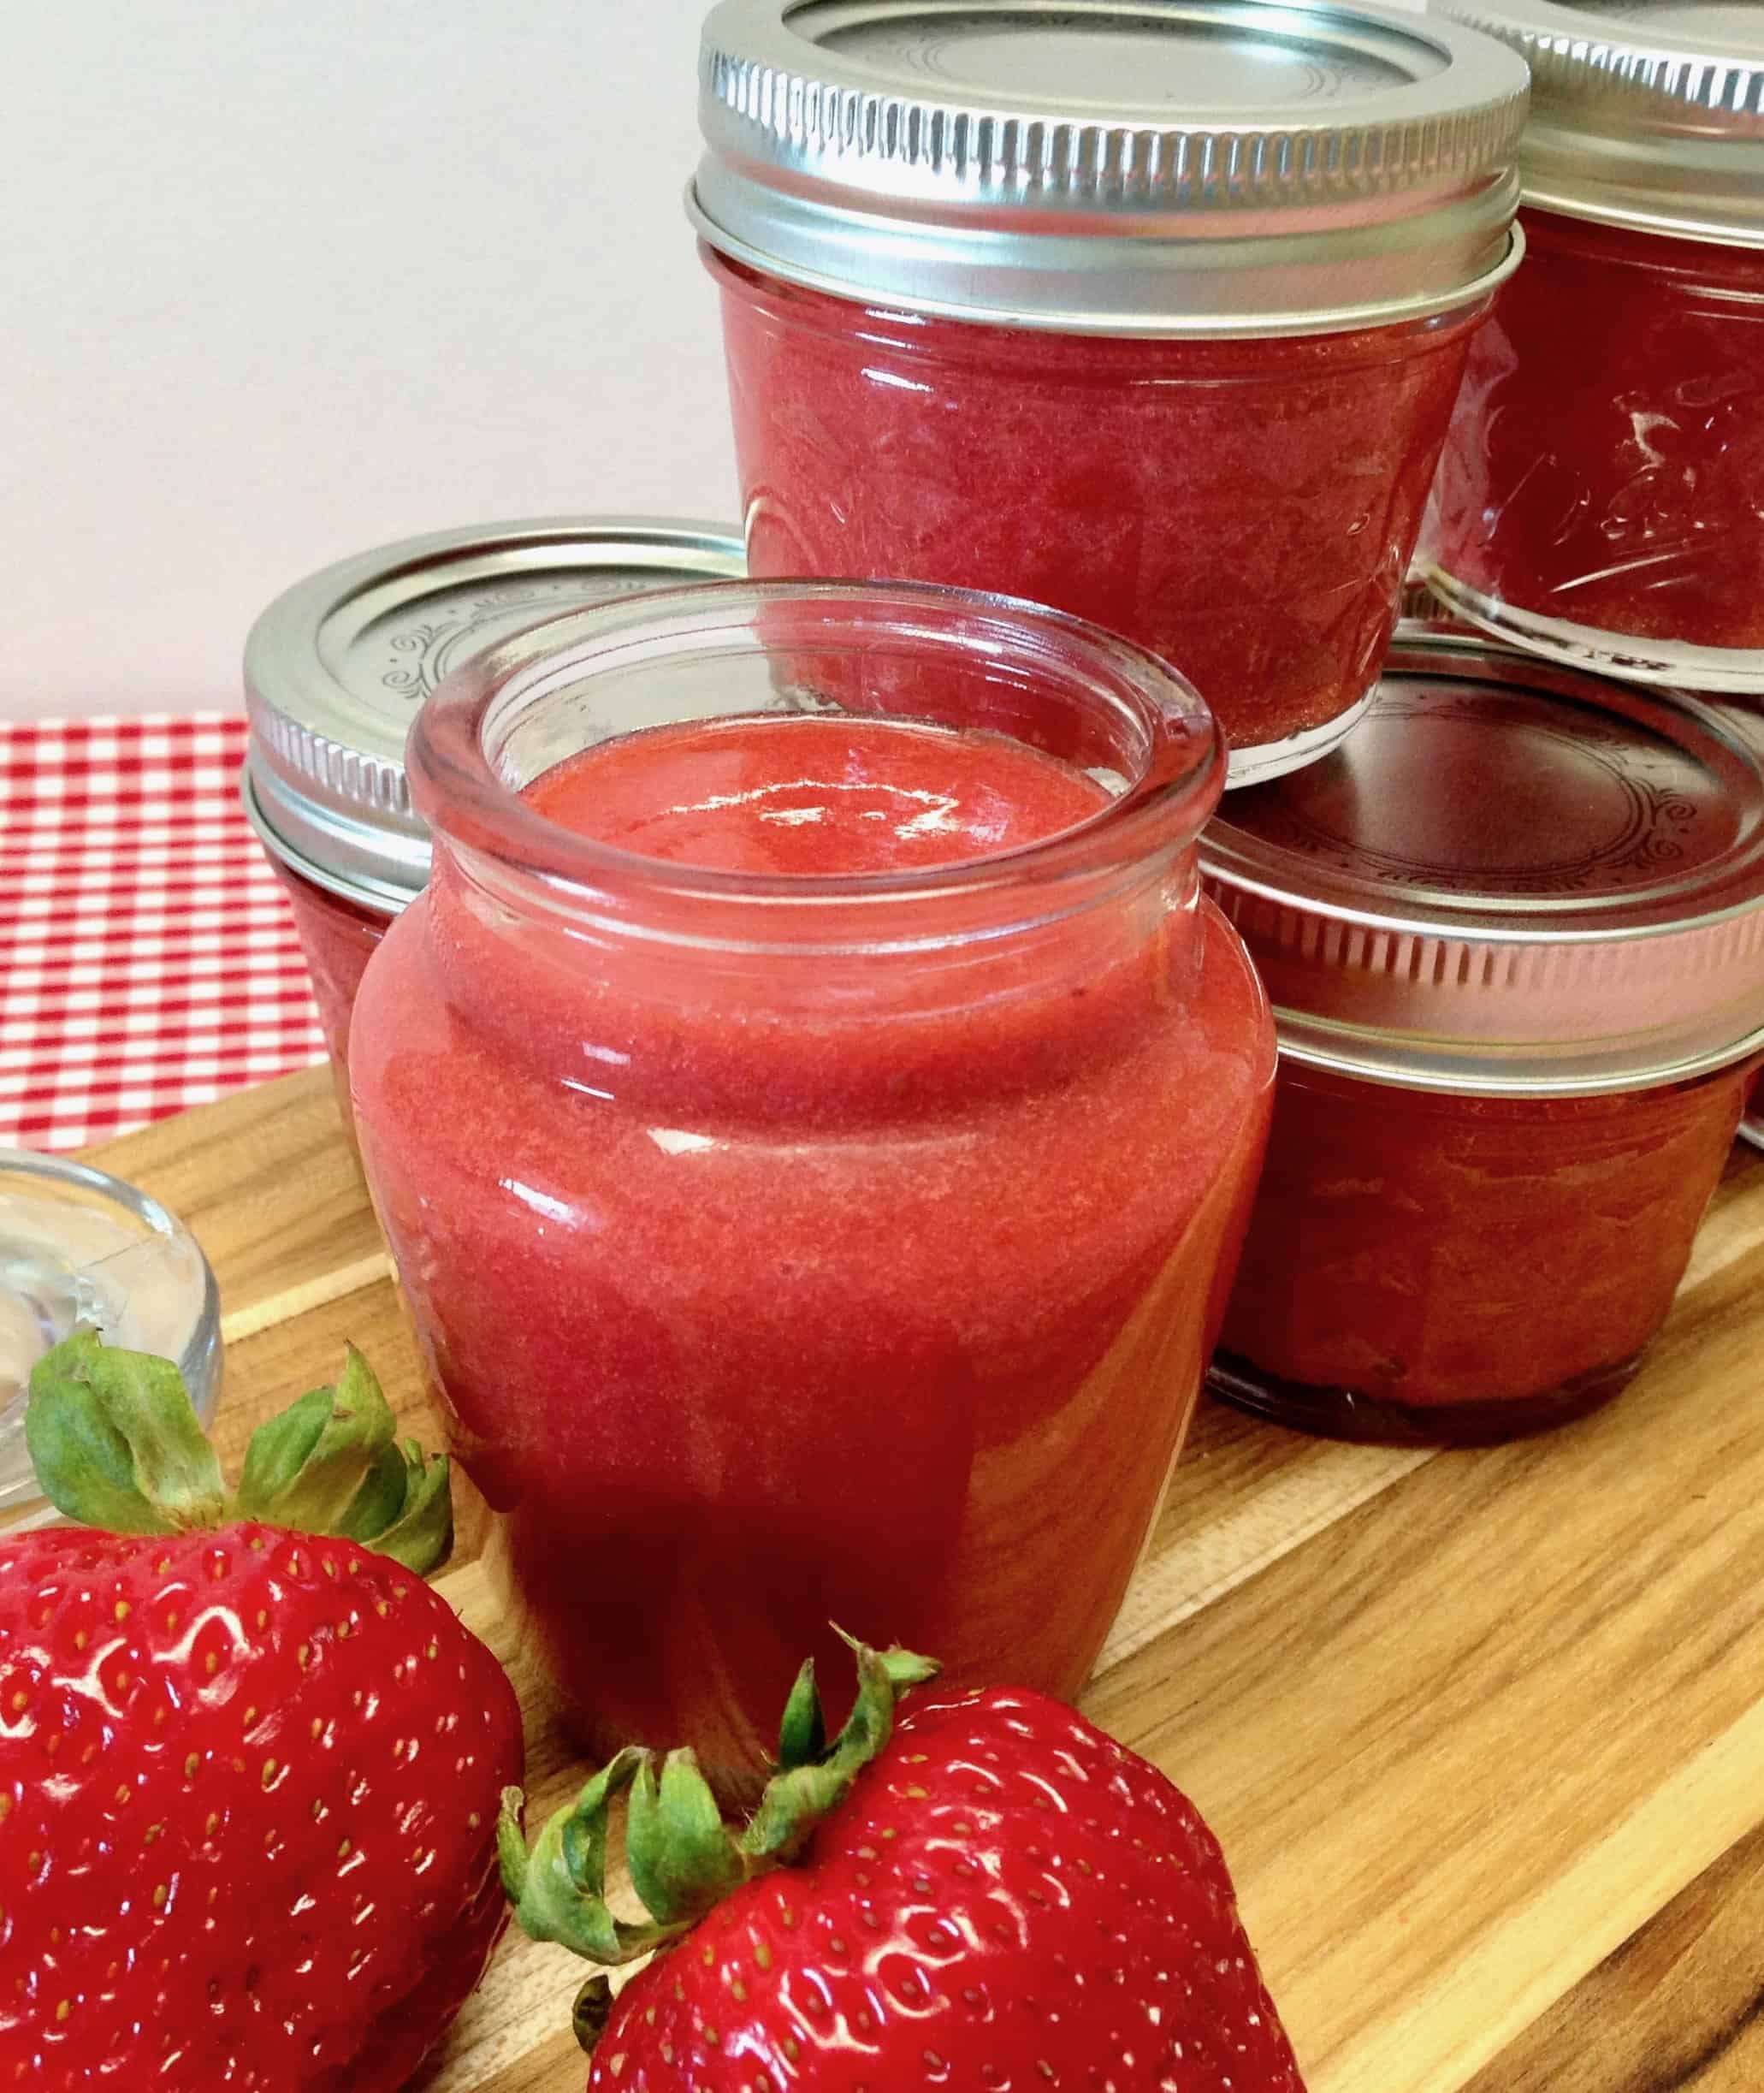 Strawberry Sauce in glass jar